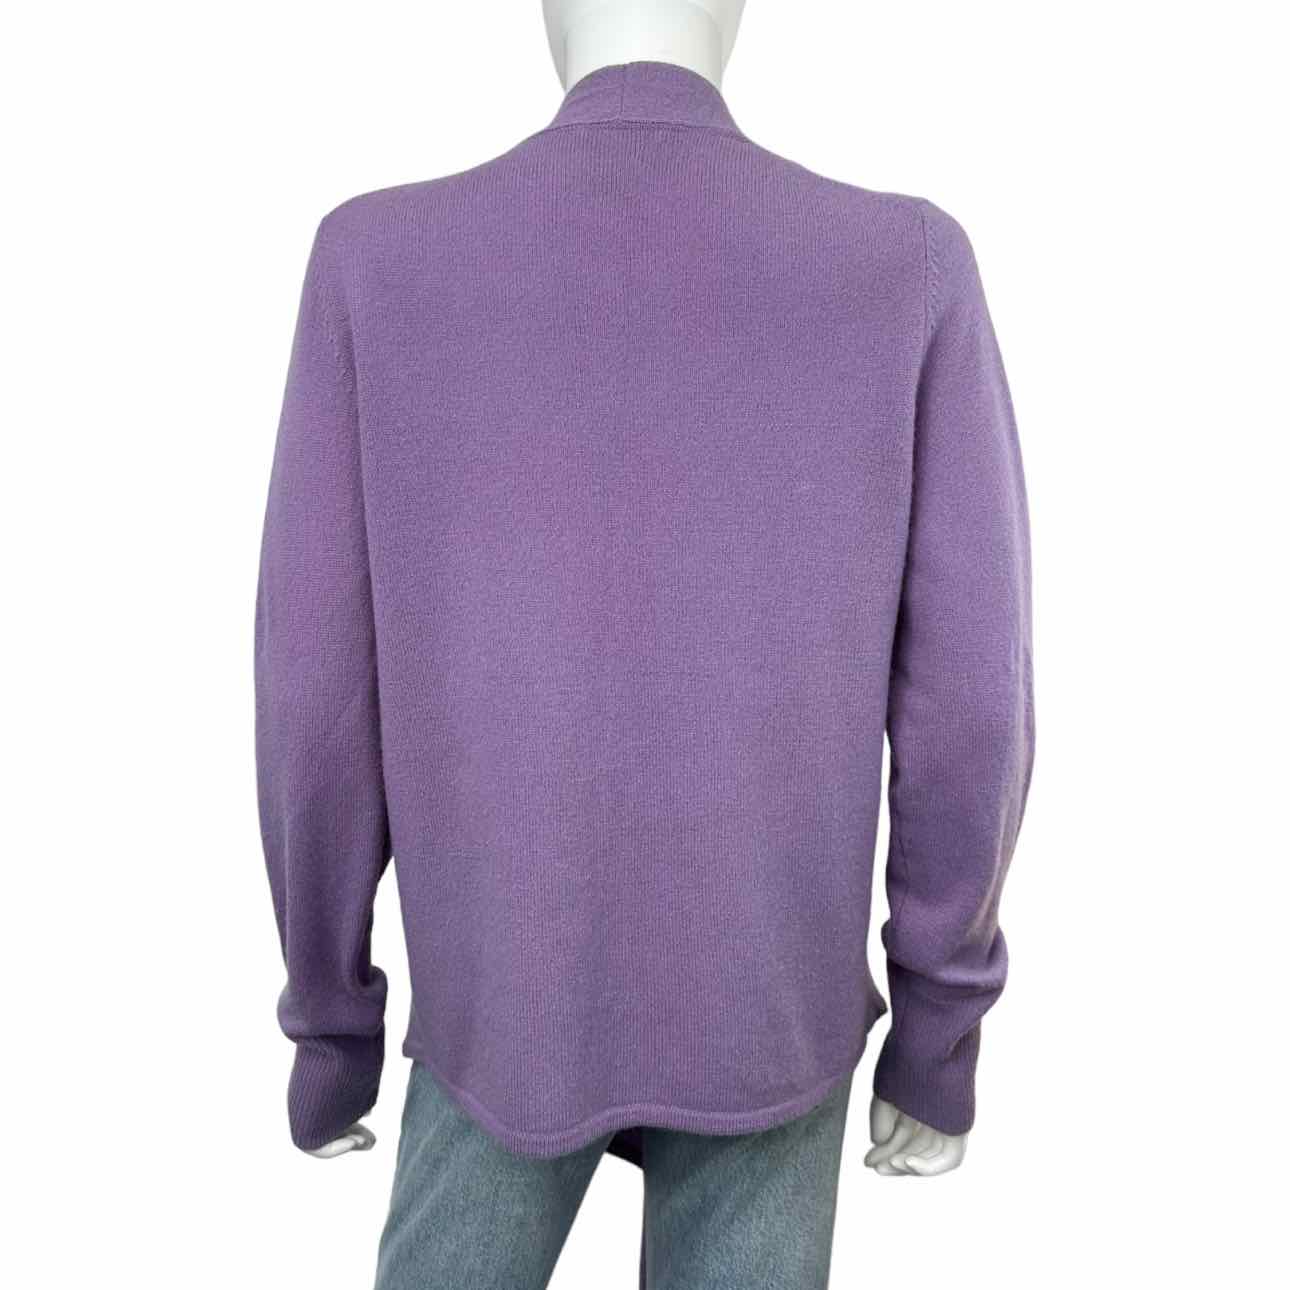 Designer brand cashmere sweater cardigan ￼